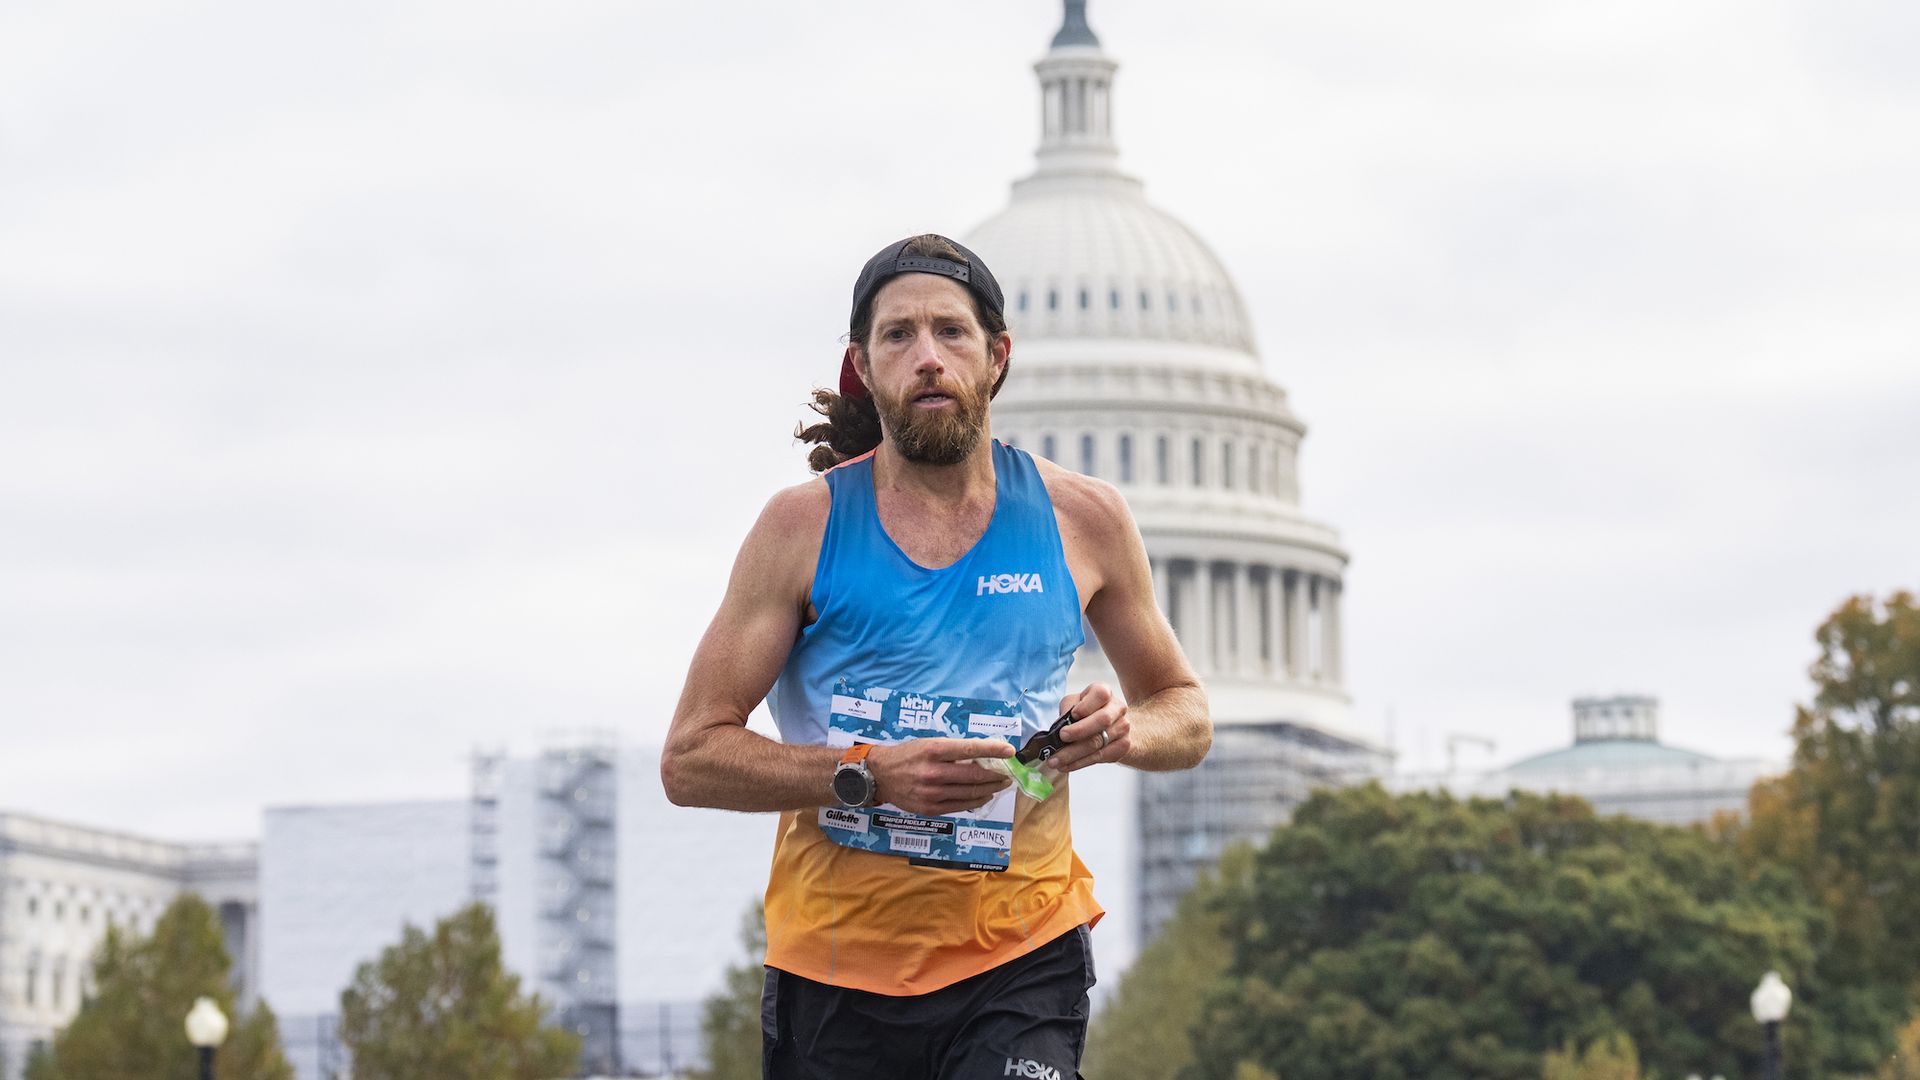 Ultra-marathoner Michael Wardian running the Marine Corps Marathon